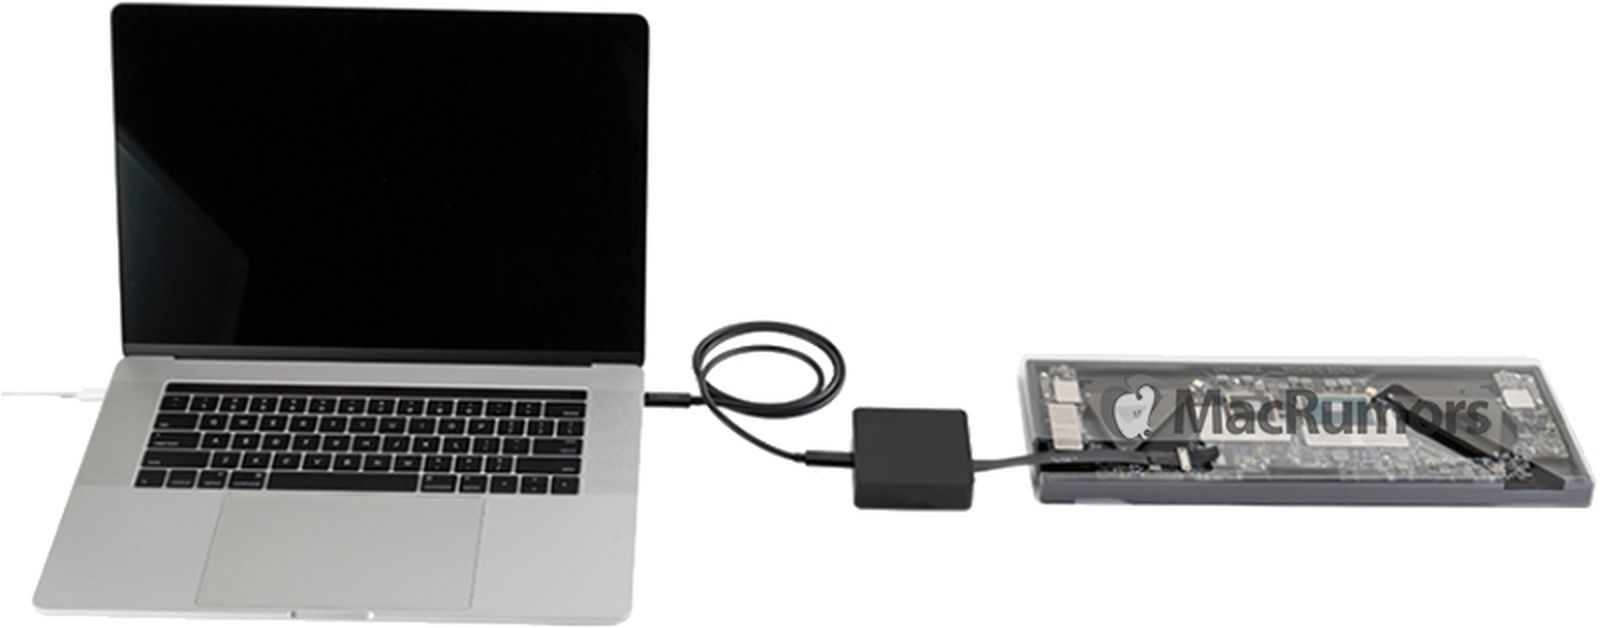 touchbar macbook pro logic board replacement